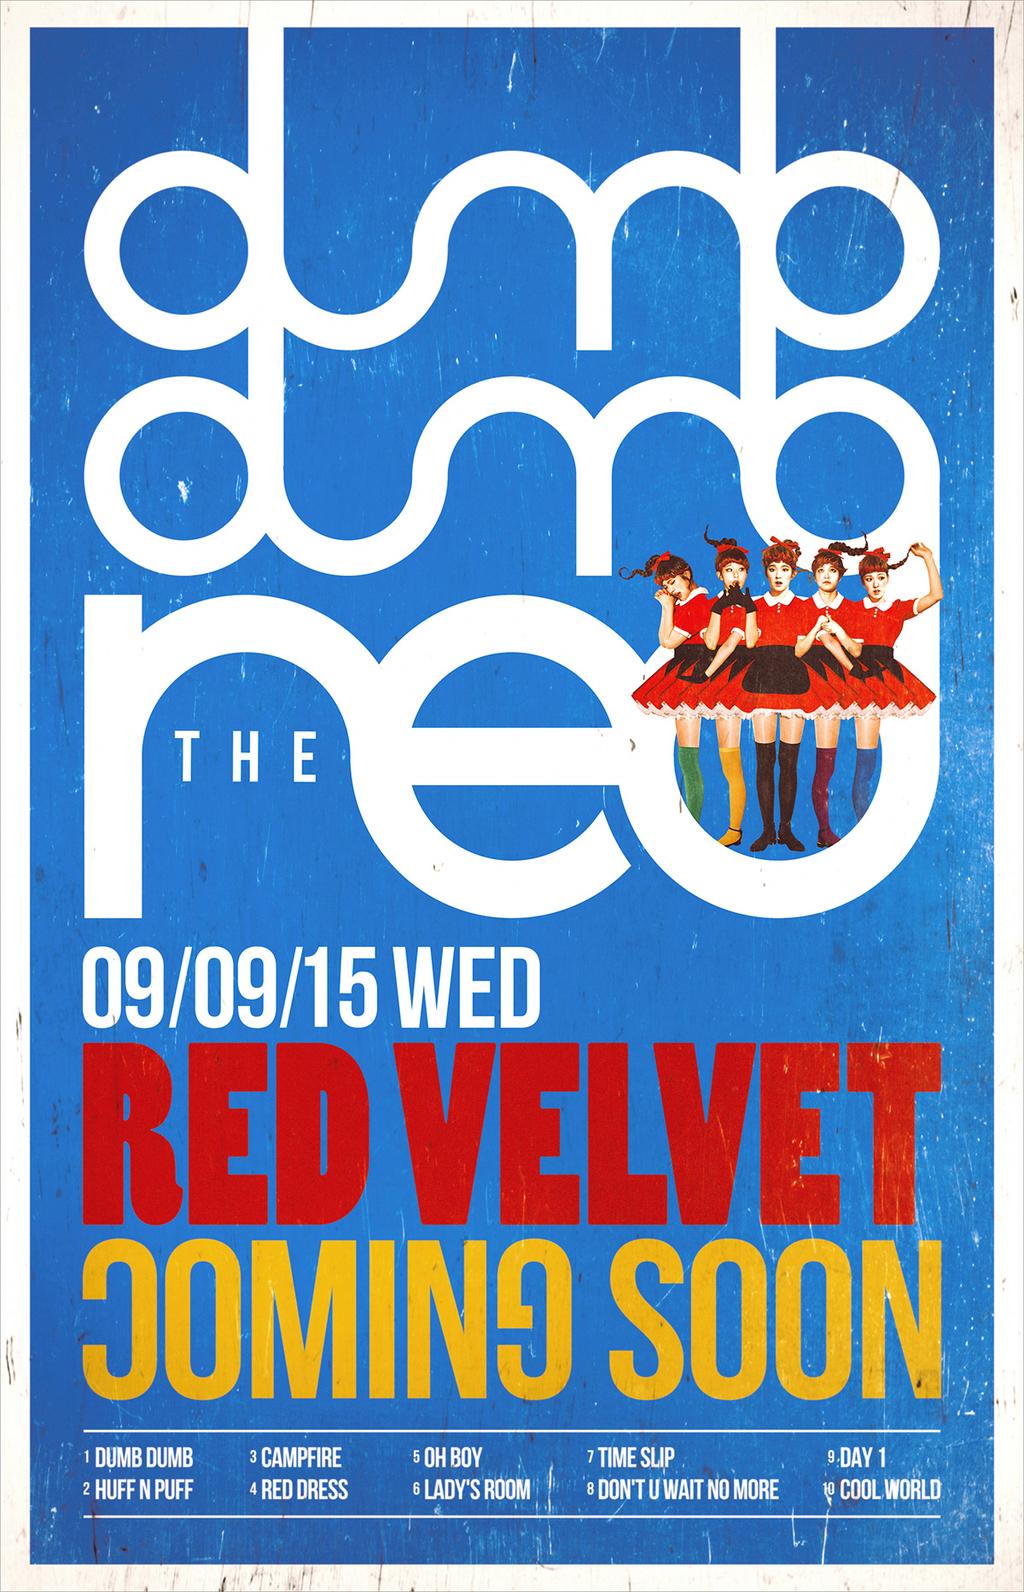 Red Velvet(레드벨벳) 새로운 티저 사진.jpg